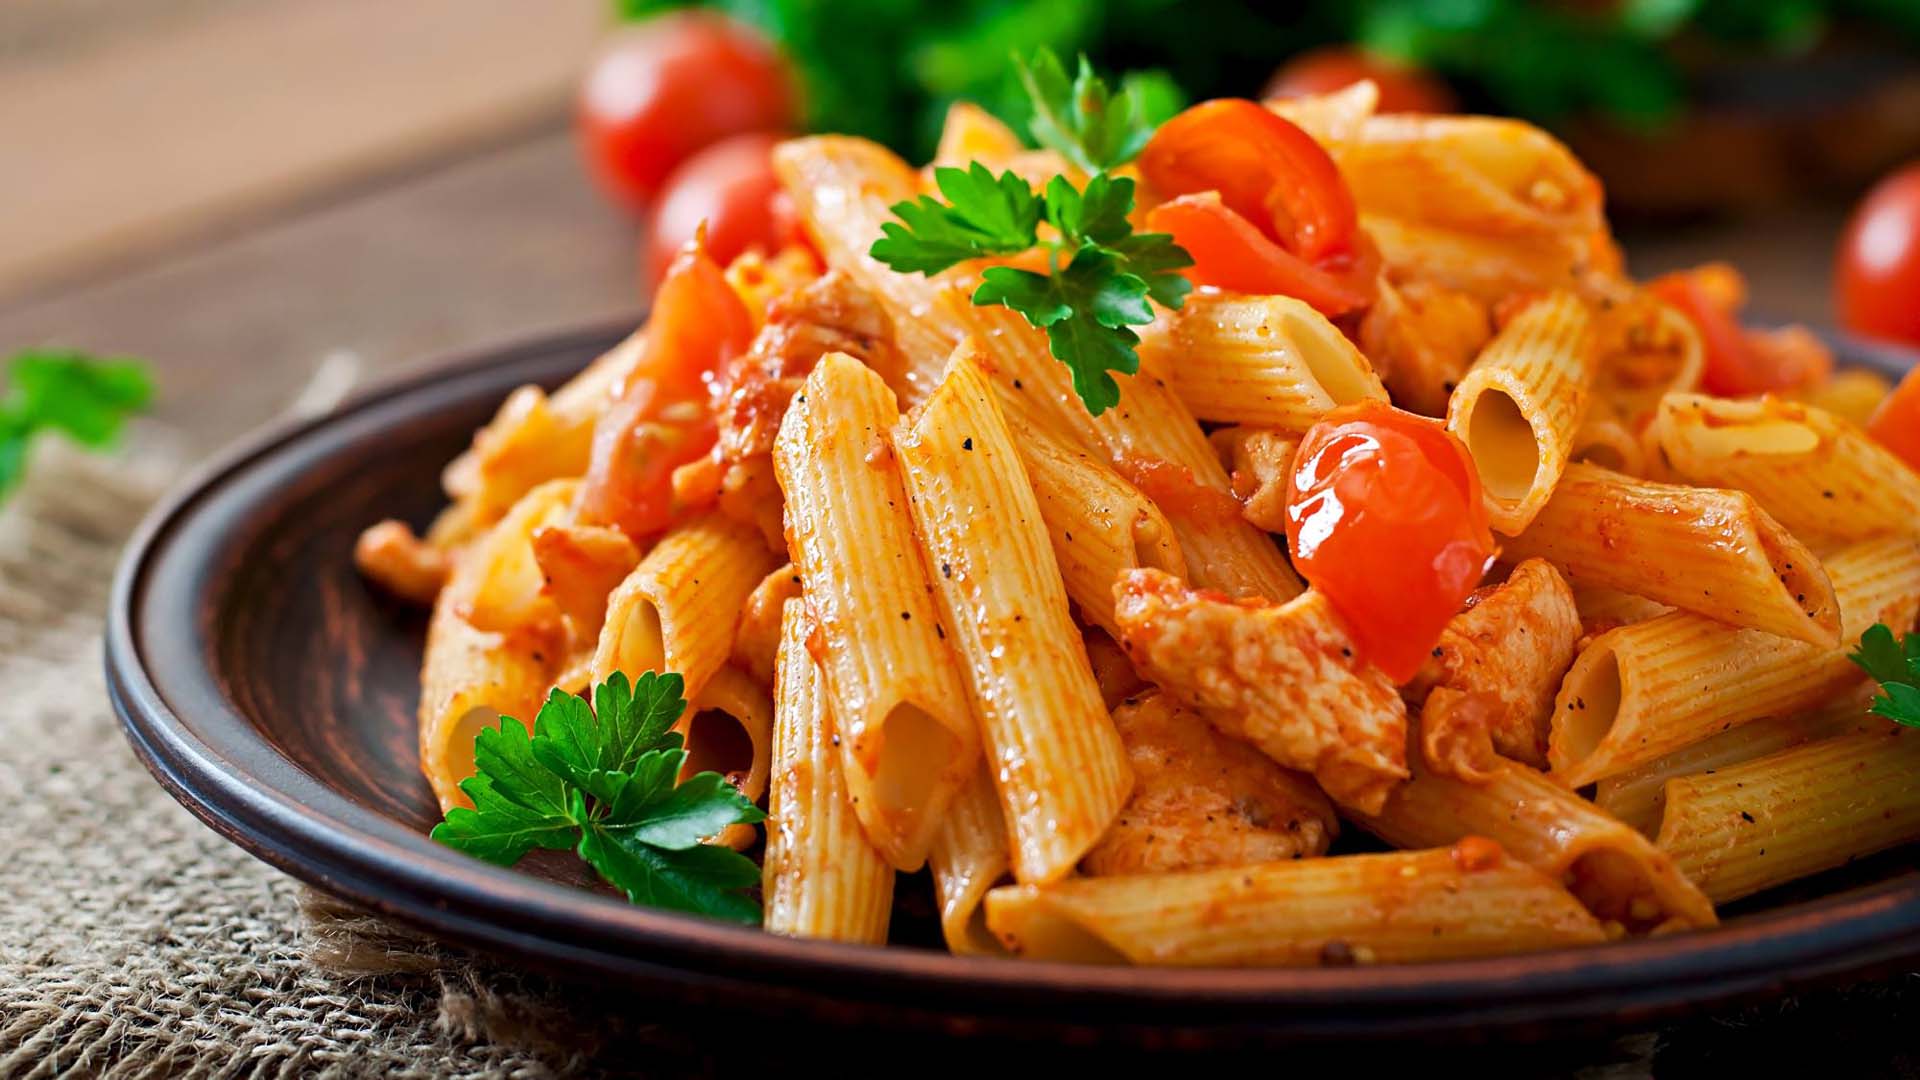 A bowl of tomato pasta